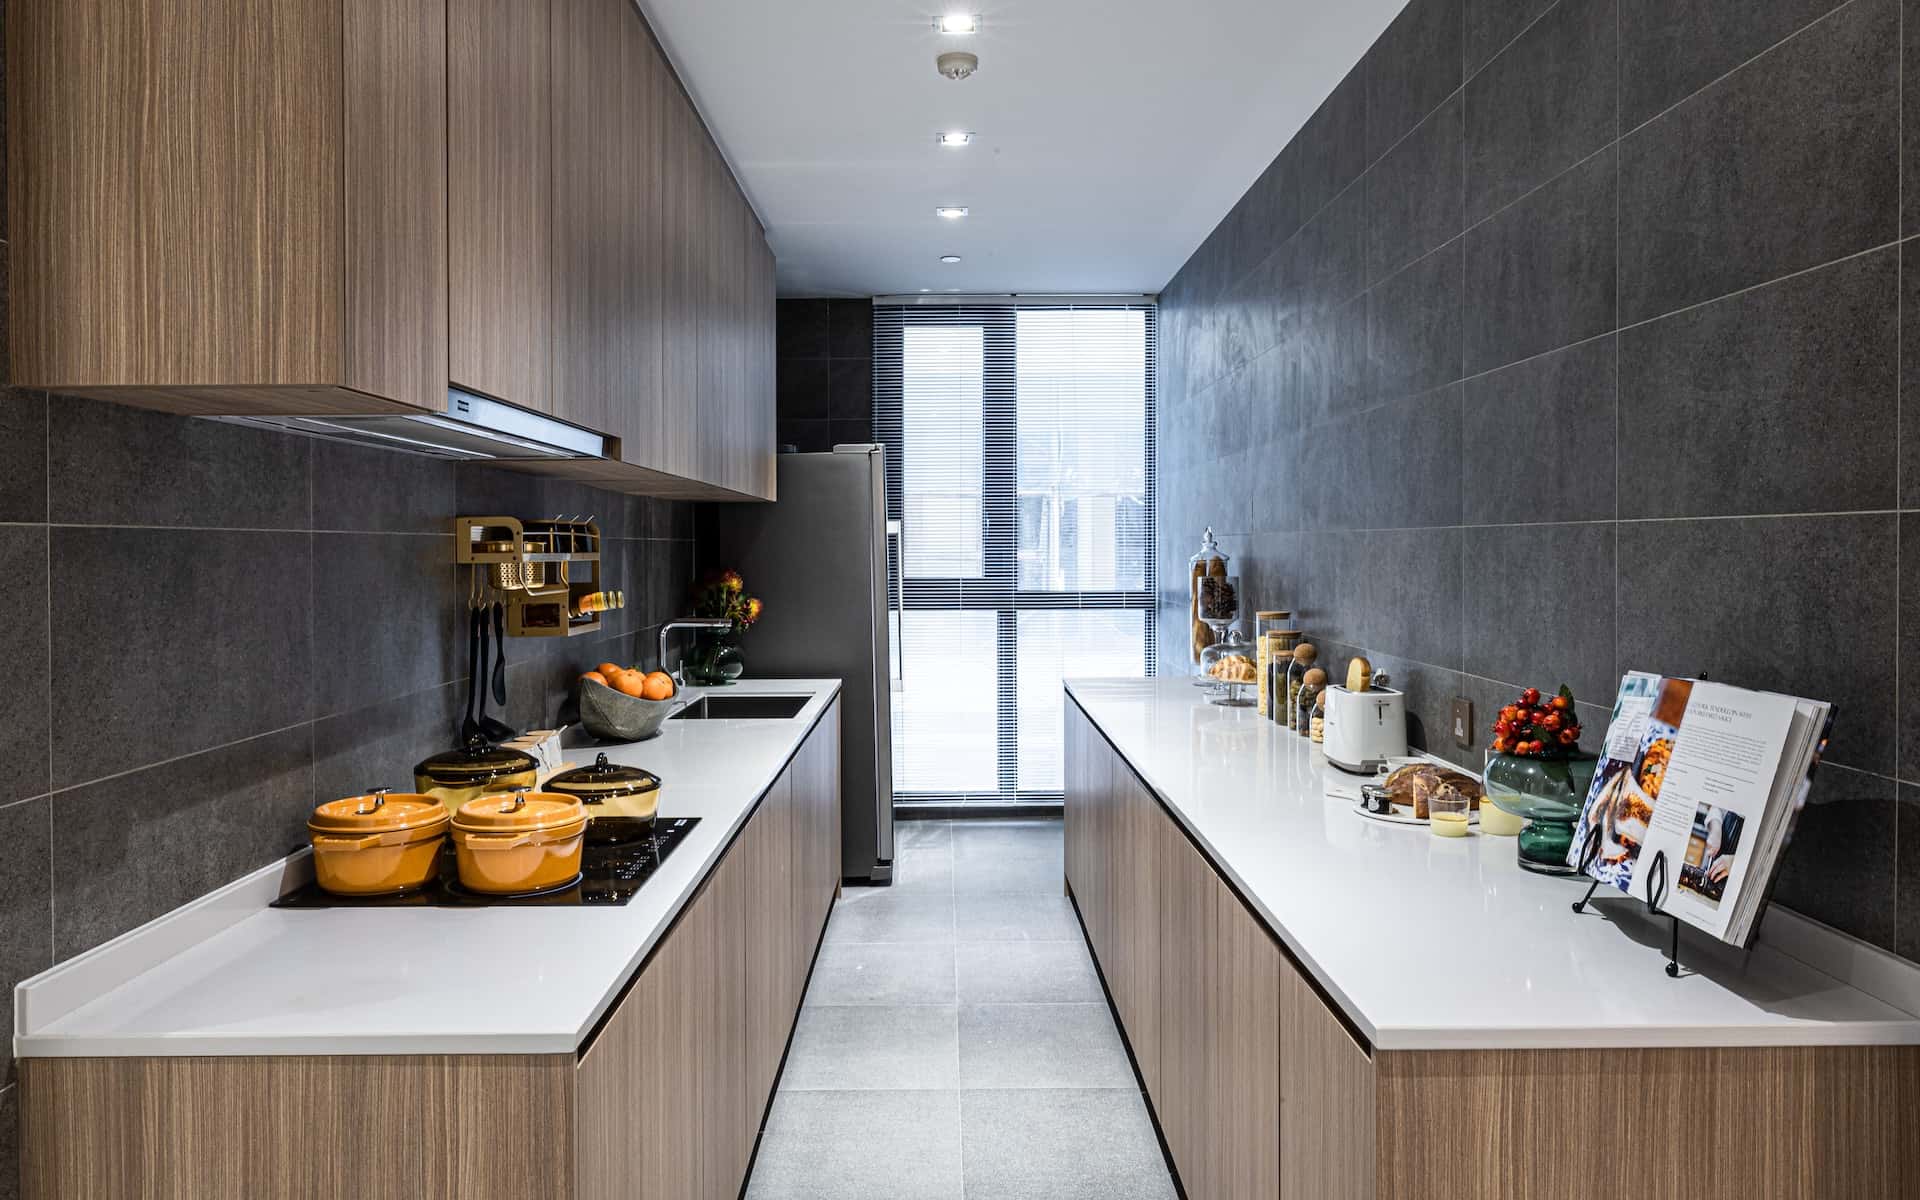 parallel style sleek kitchen design